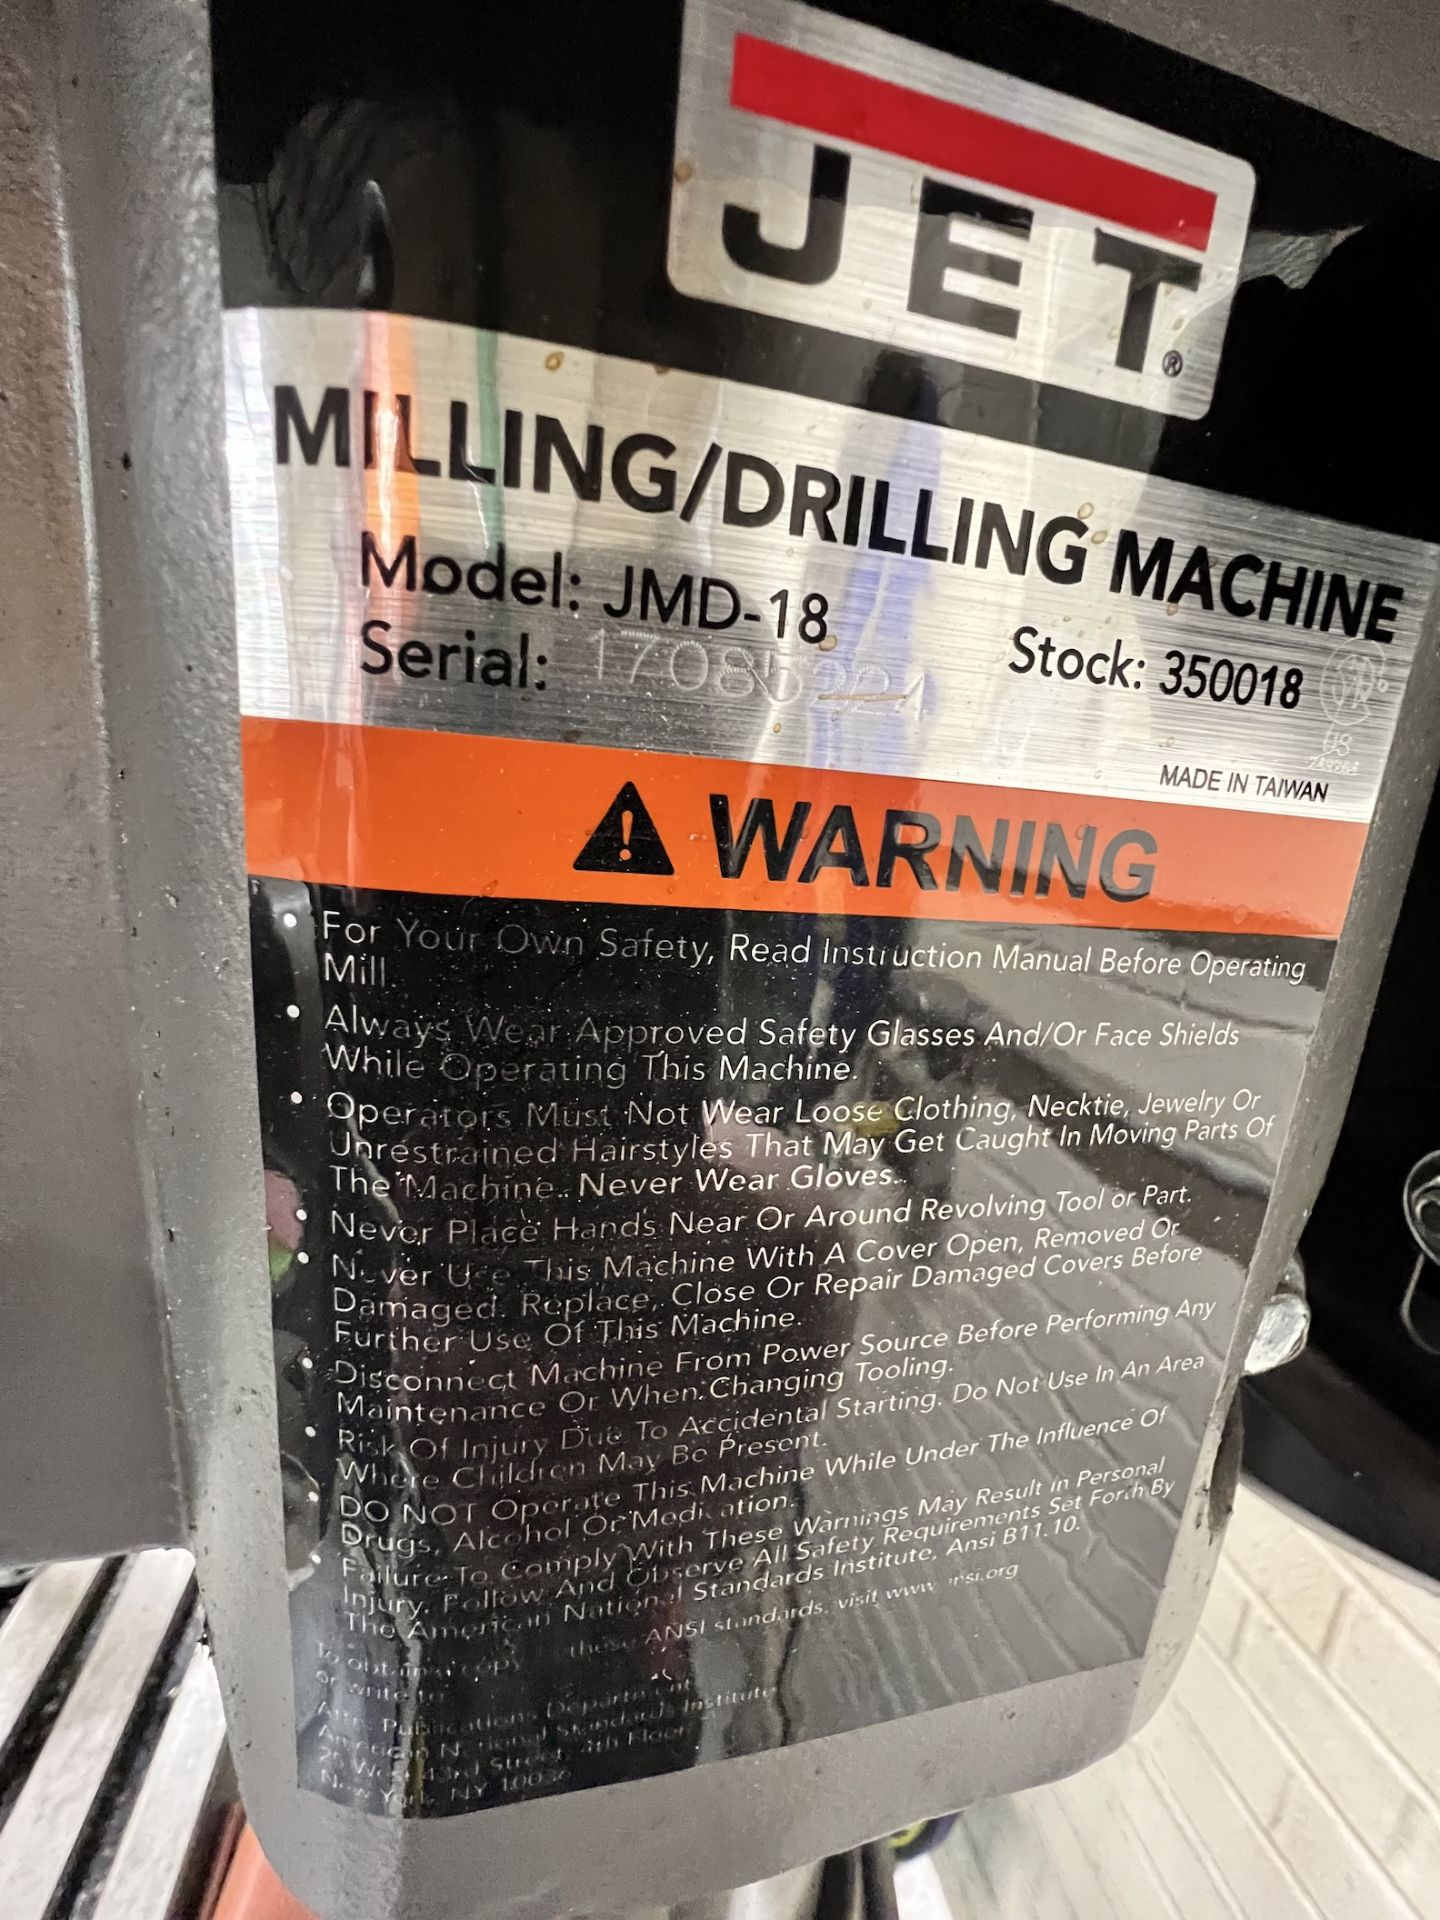 JET PEDESTAL MILLING / DRILLING MACHINE, MODEL JMD-18, S/N 17085221, STOCK 350018 - Image 4 of 6